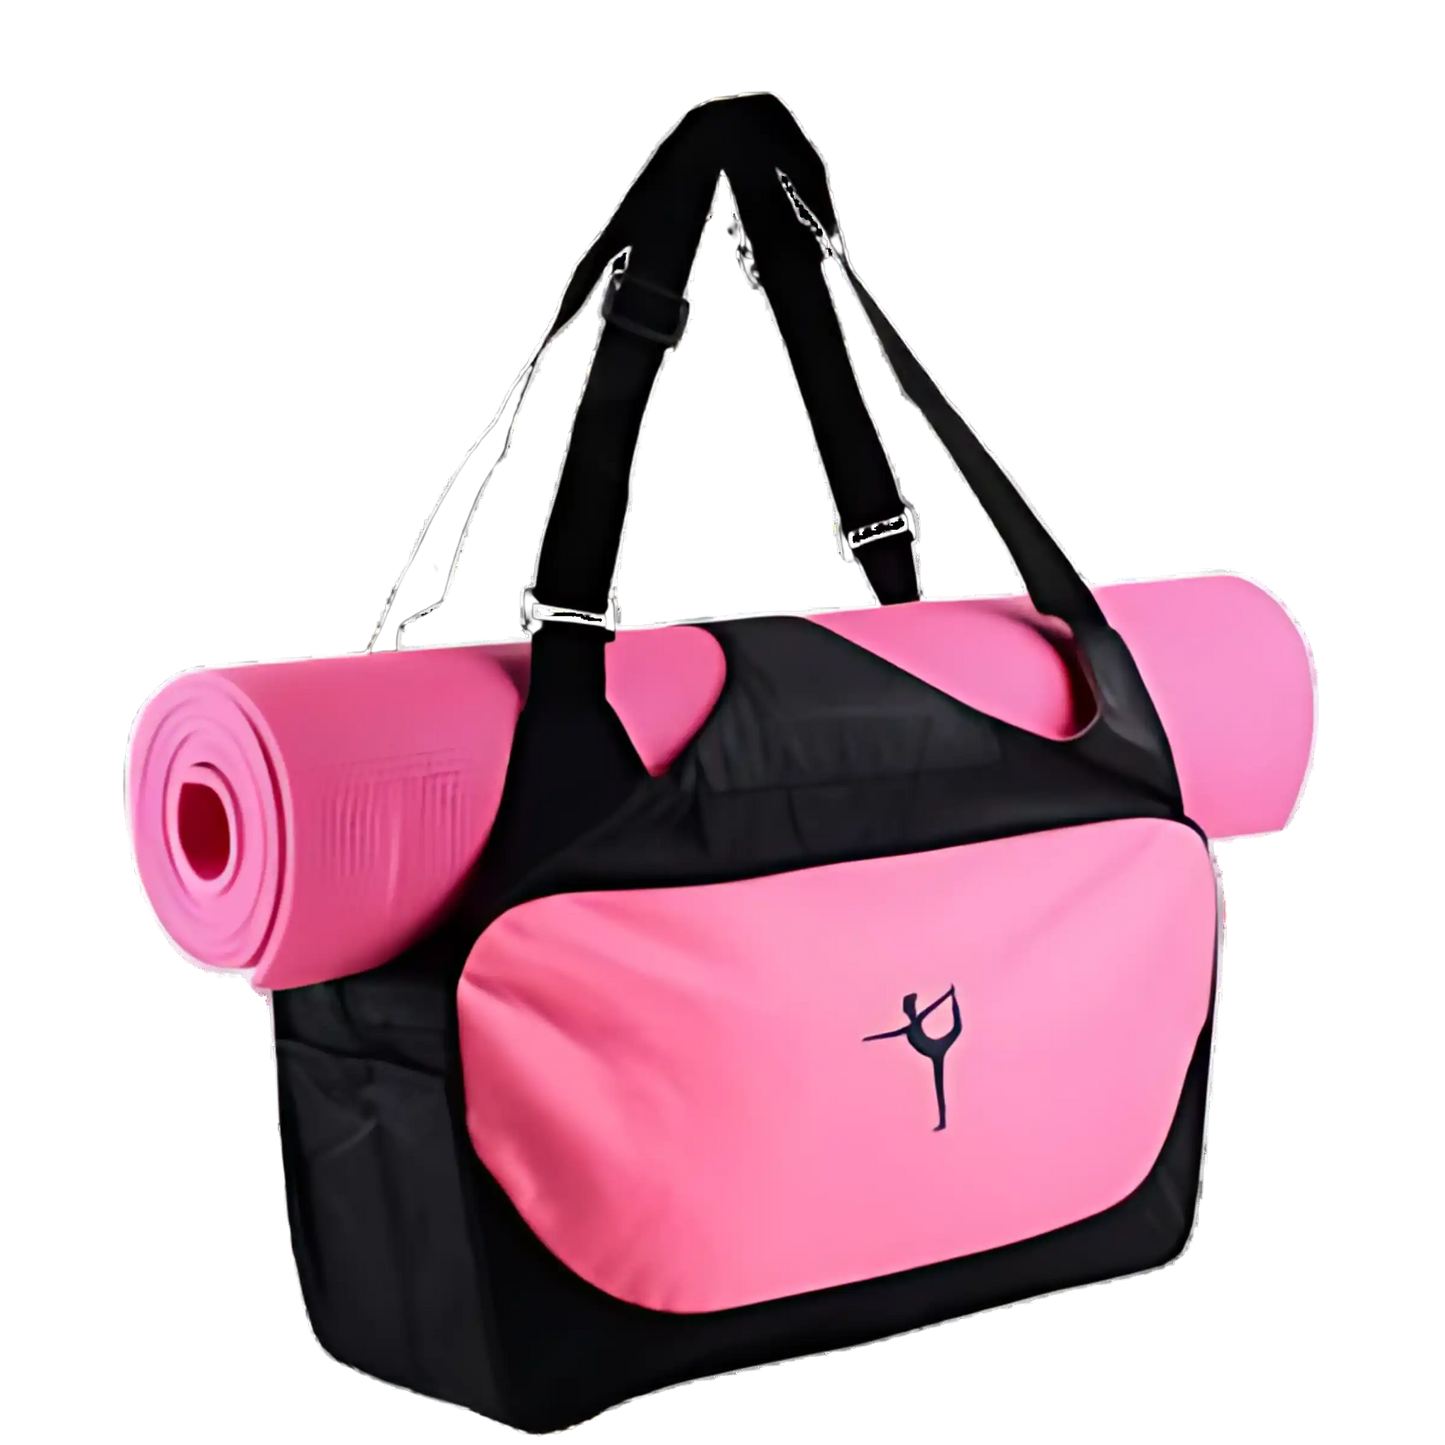 WATERPROOF YOGA MAT CARRIER BACKPACK - Pink - Yoga Bag